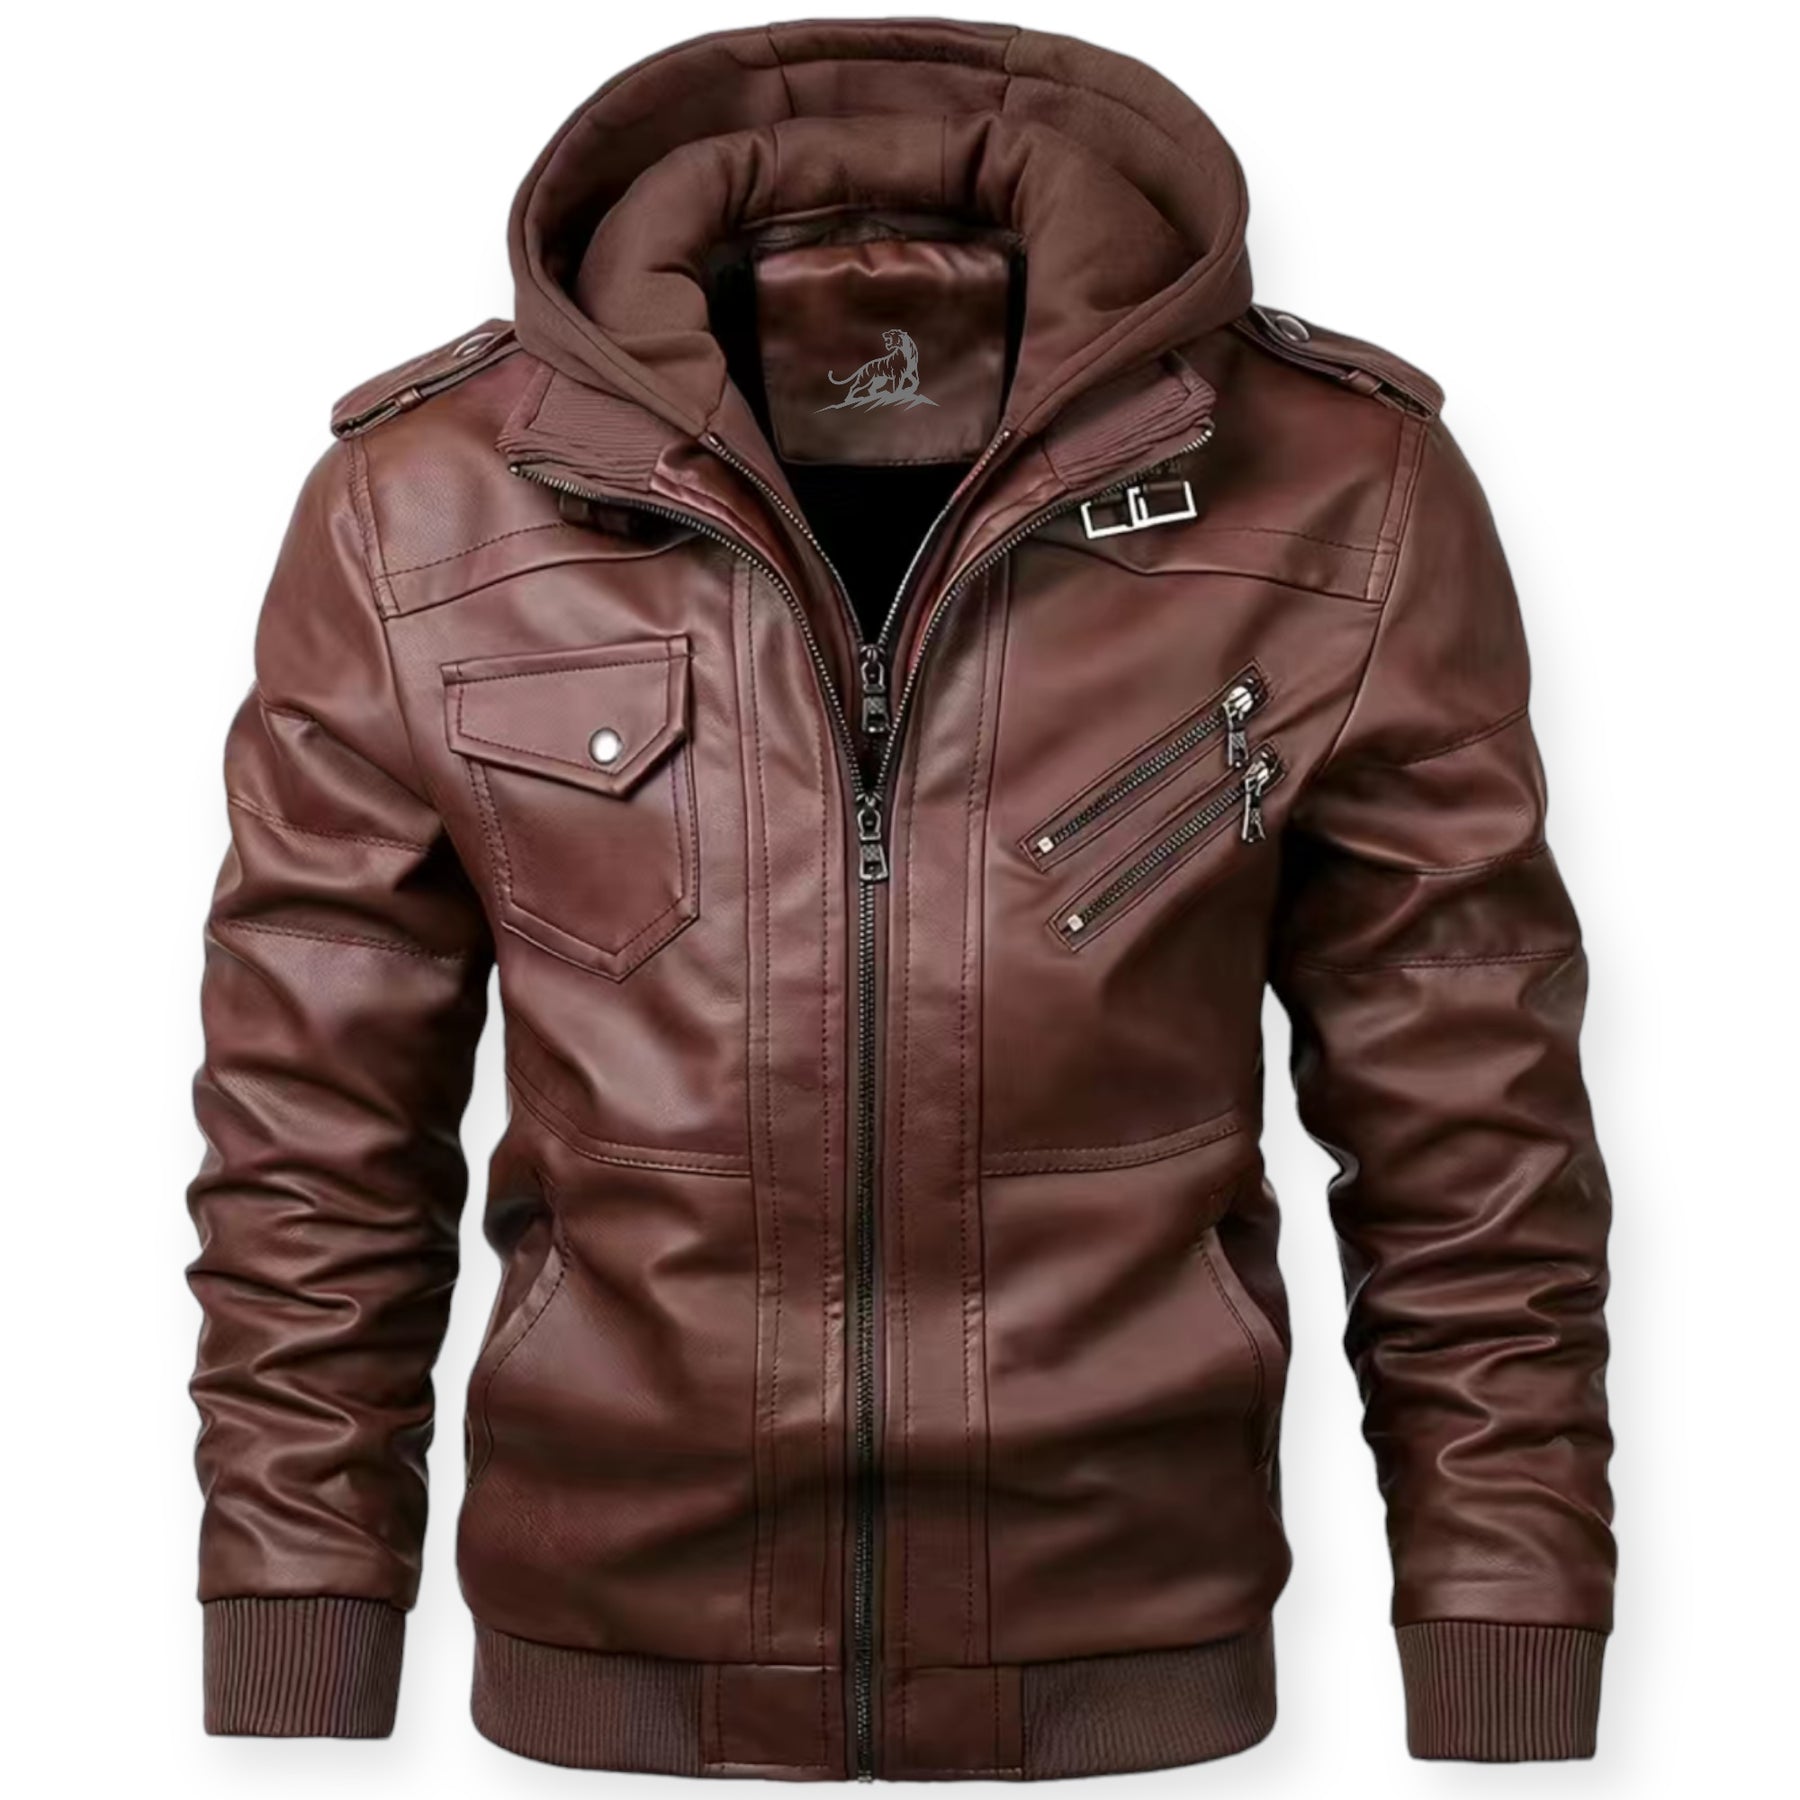 'Mortal Legend' Leather Jacket – MistyMen